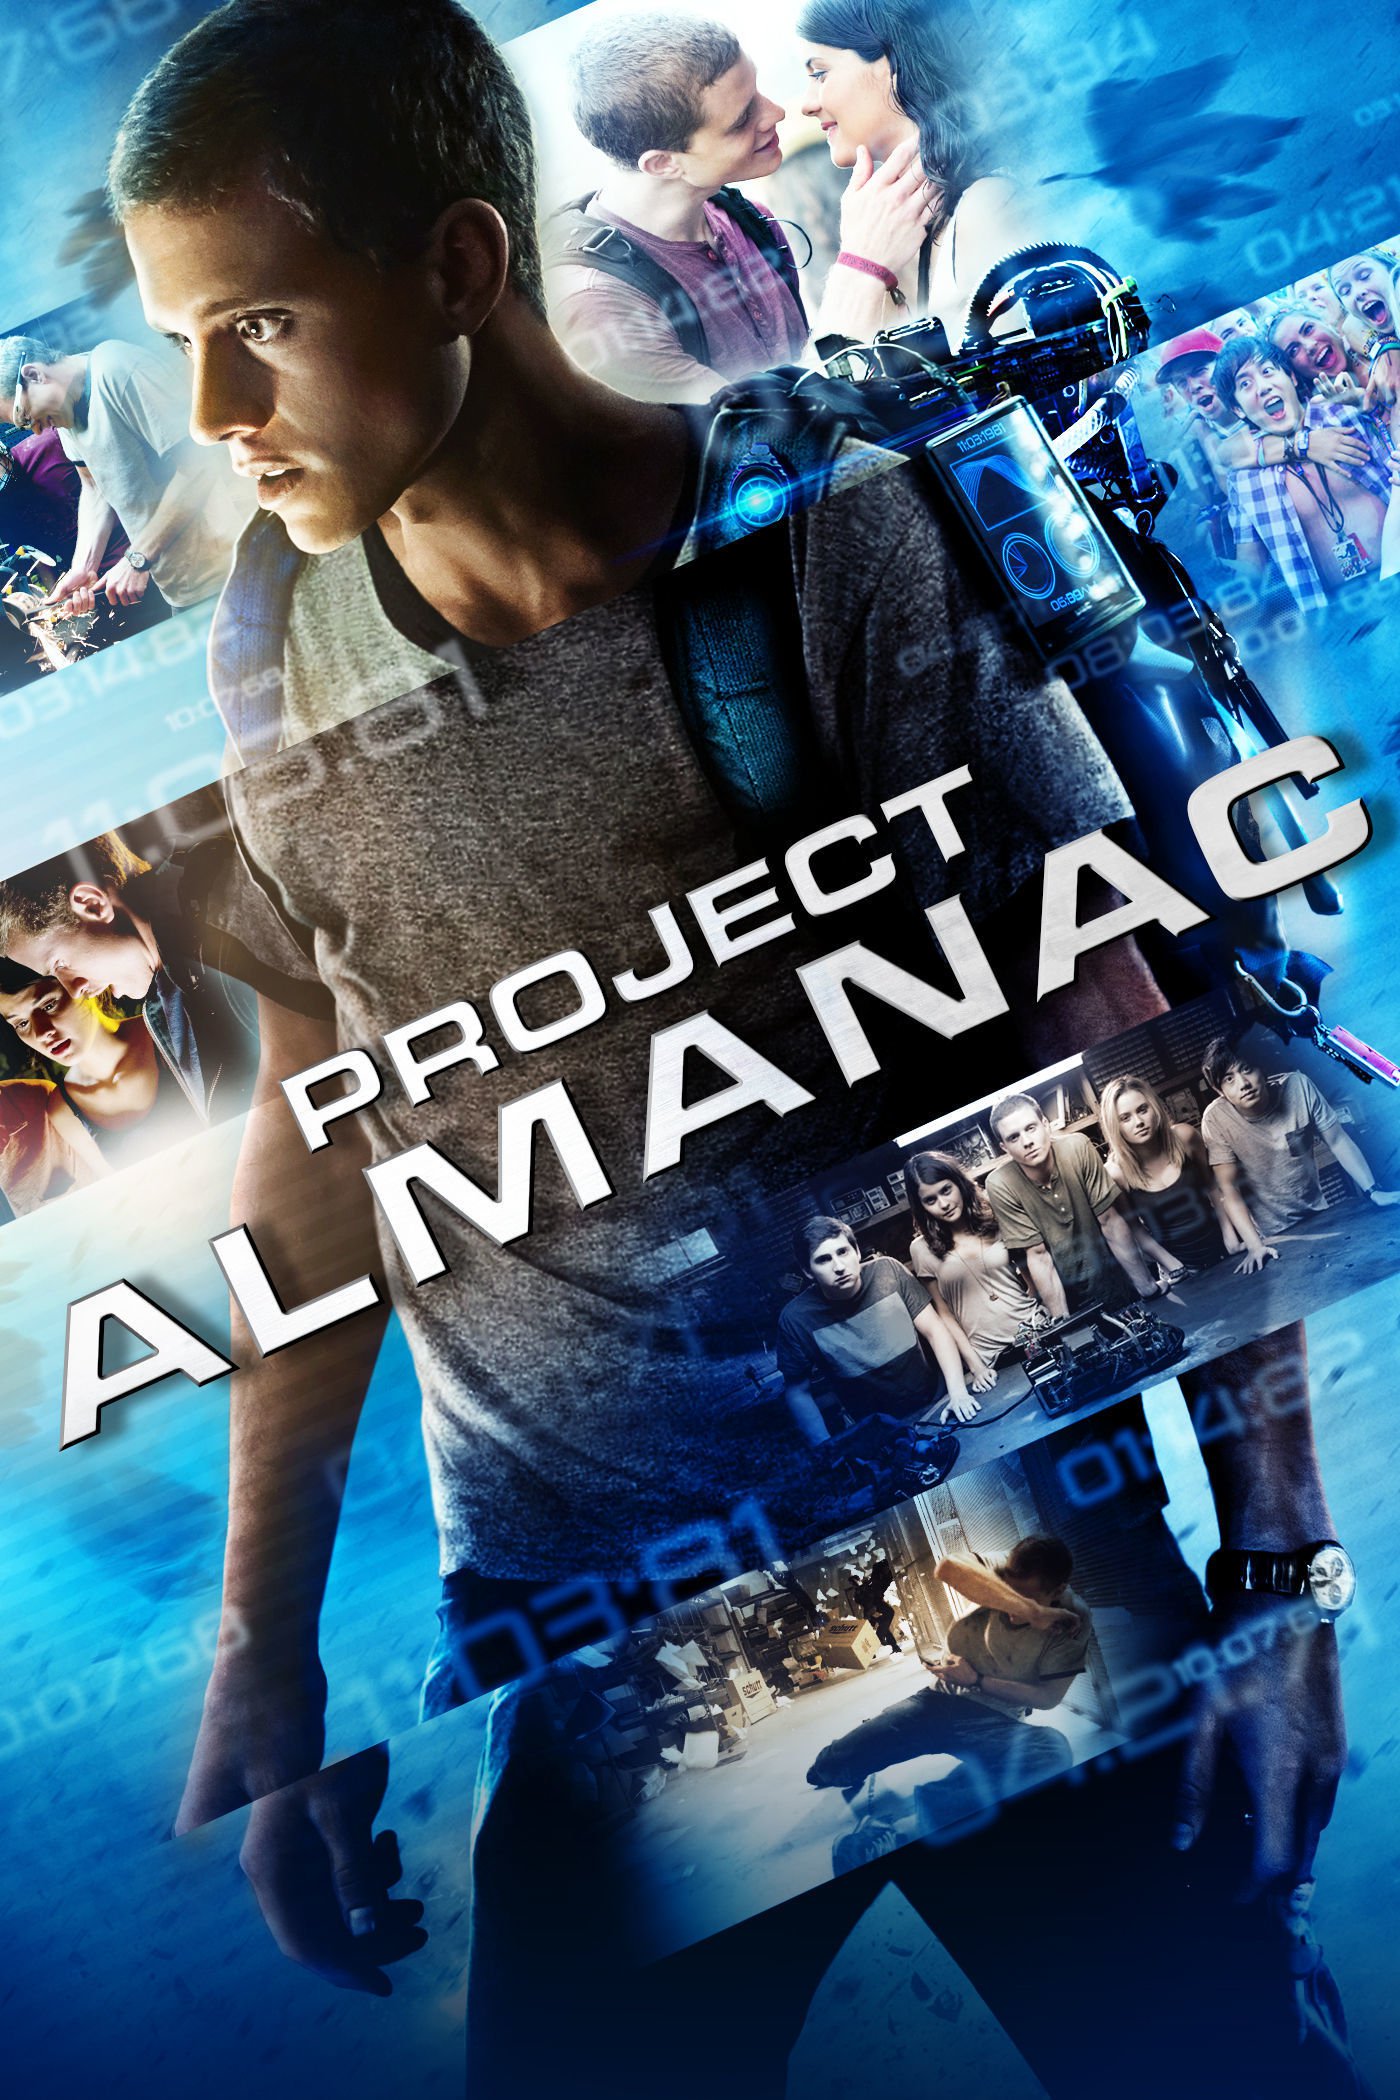 Plakat von "Project Almanac"